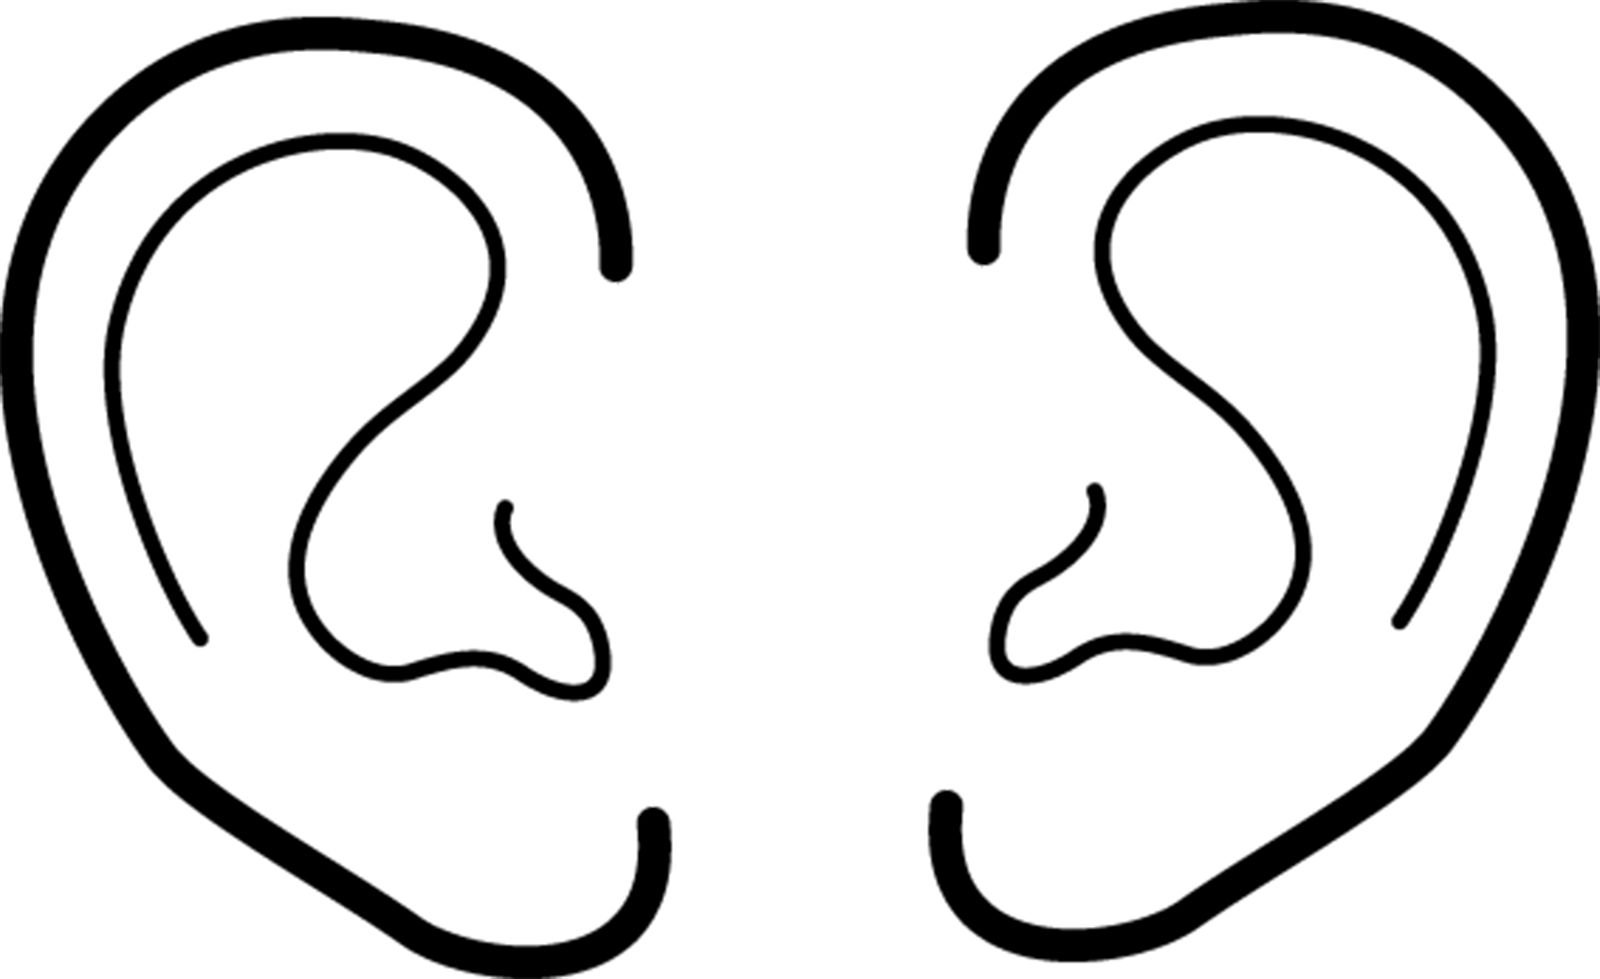 Ear clipart earclipart images - Ears Clip Art